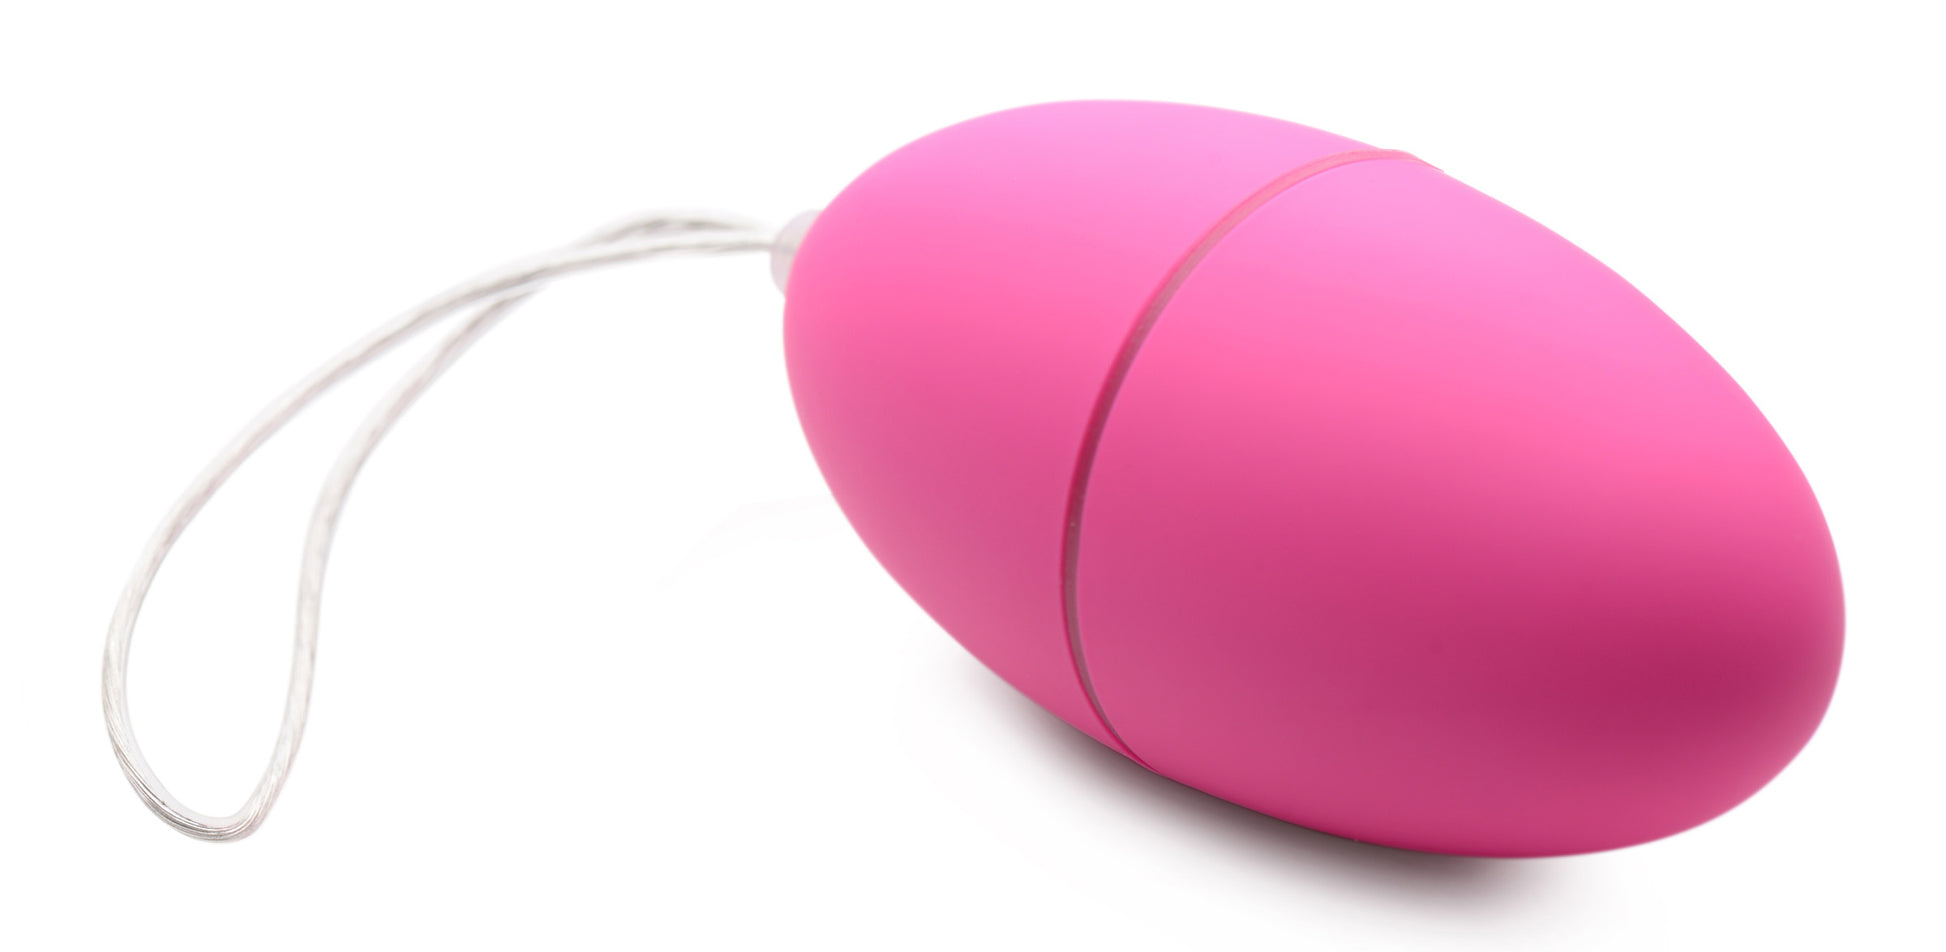 28X Scrambler Vibrating Egg with Remote Control - Pink - UABDSM